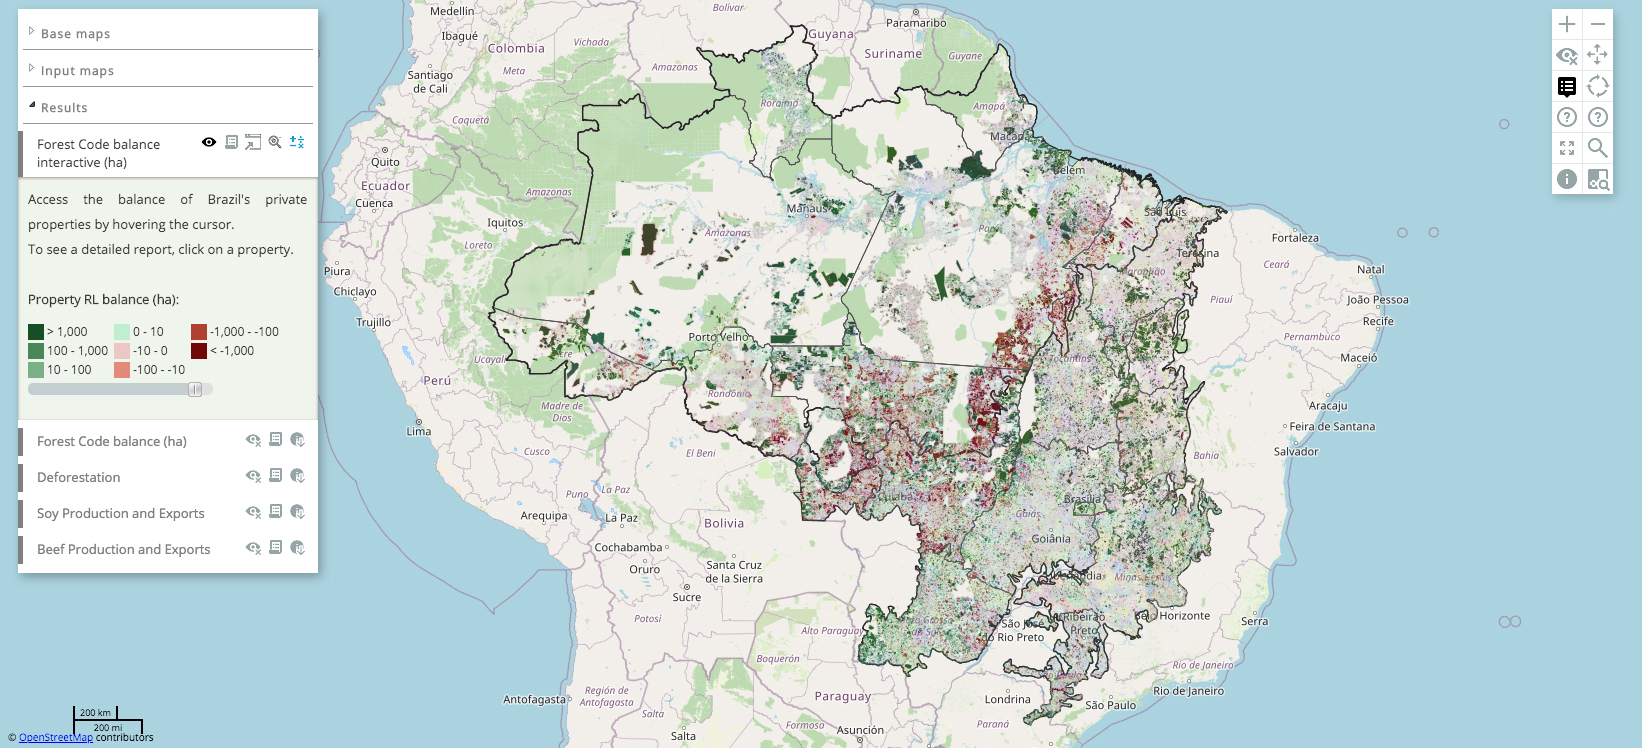 Brazil Deforestation Supply Chain Web 